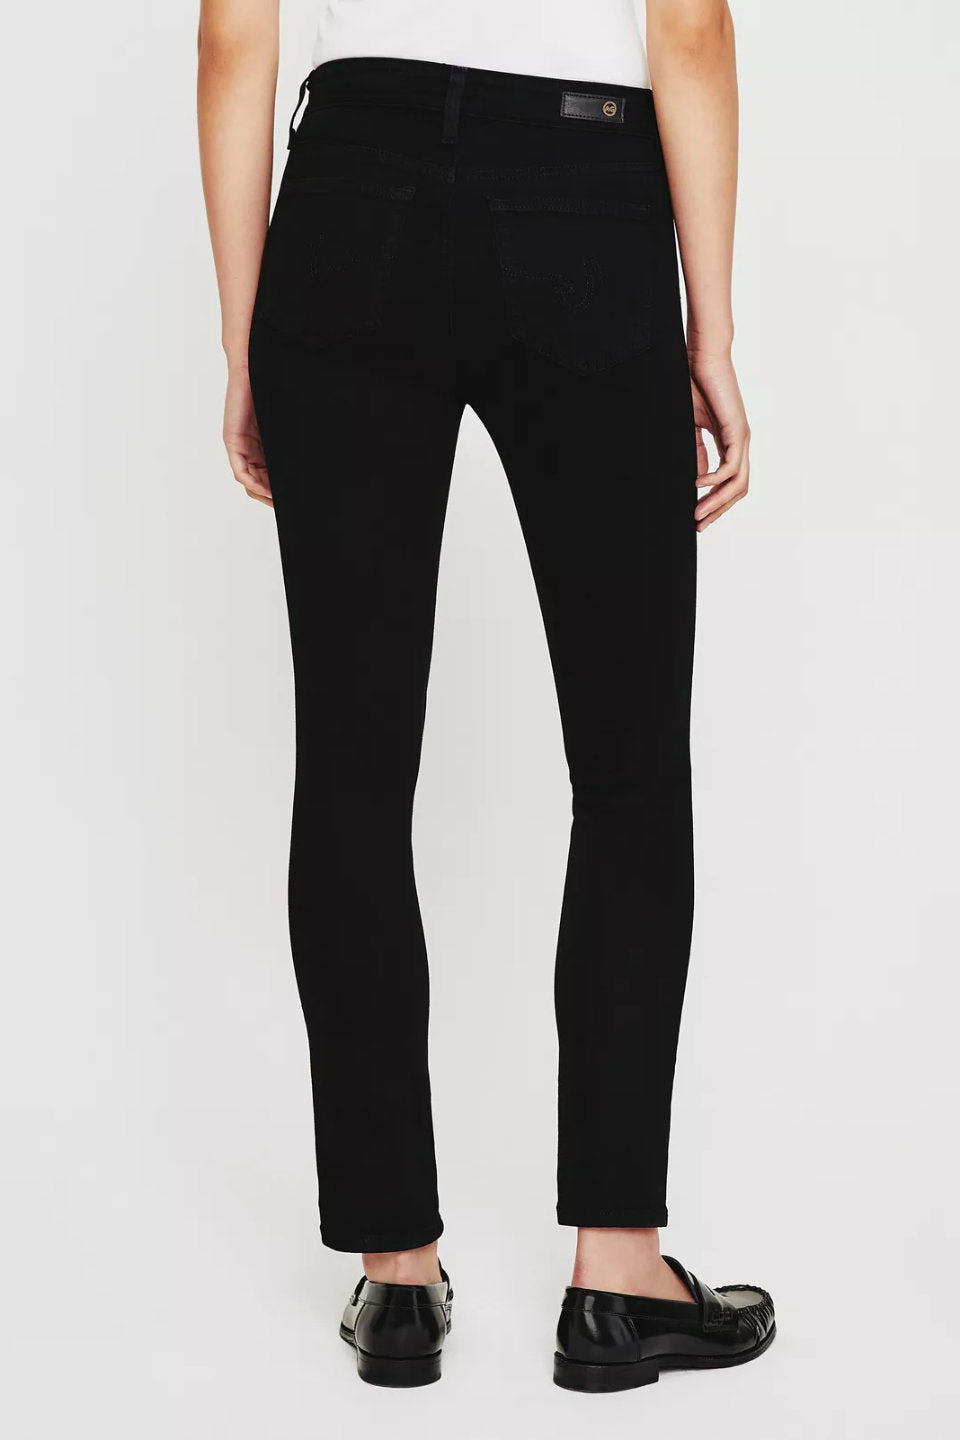 Mari Jeans - Opulent Black